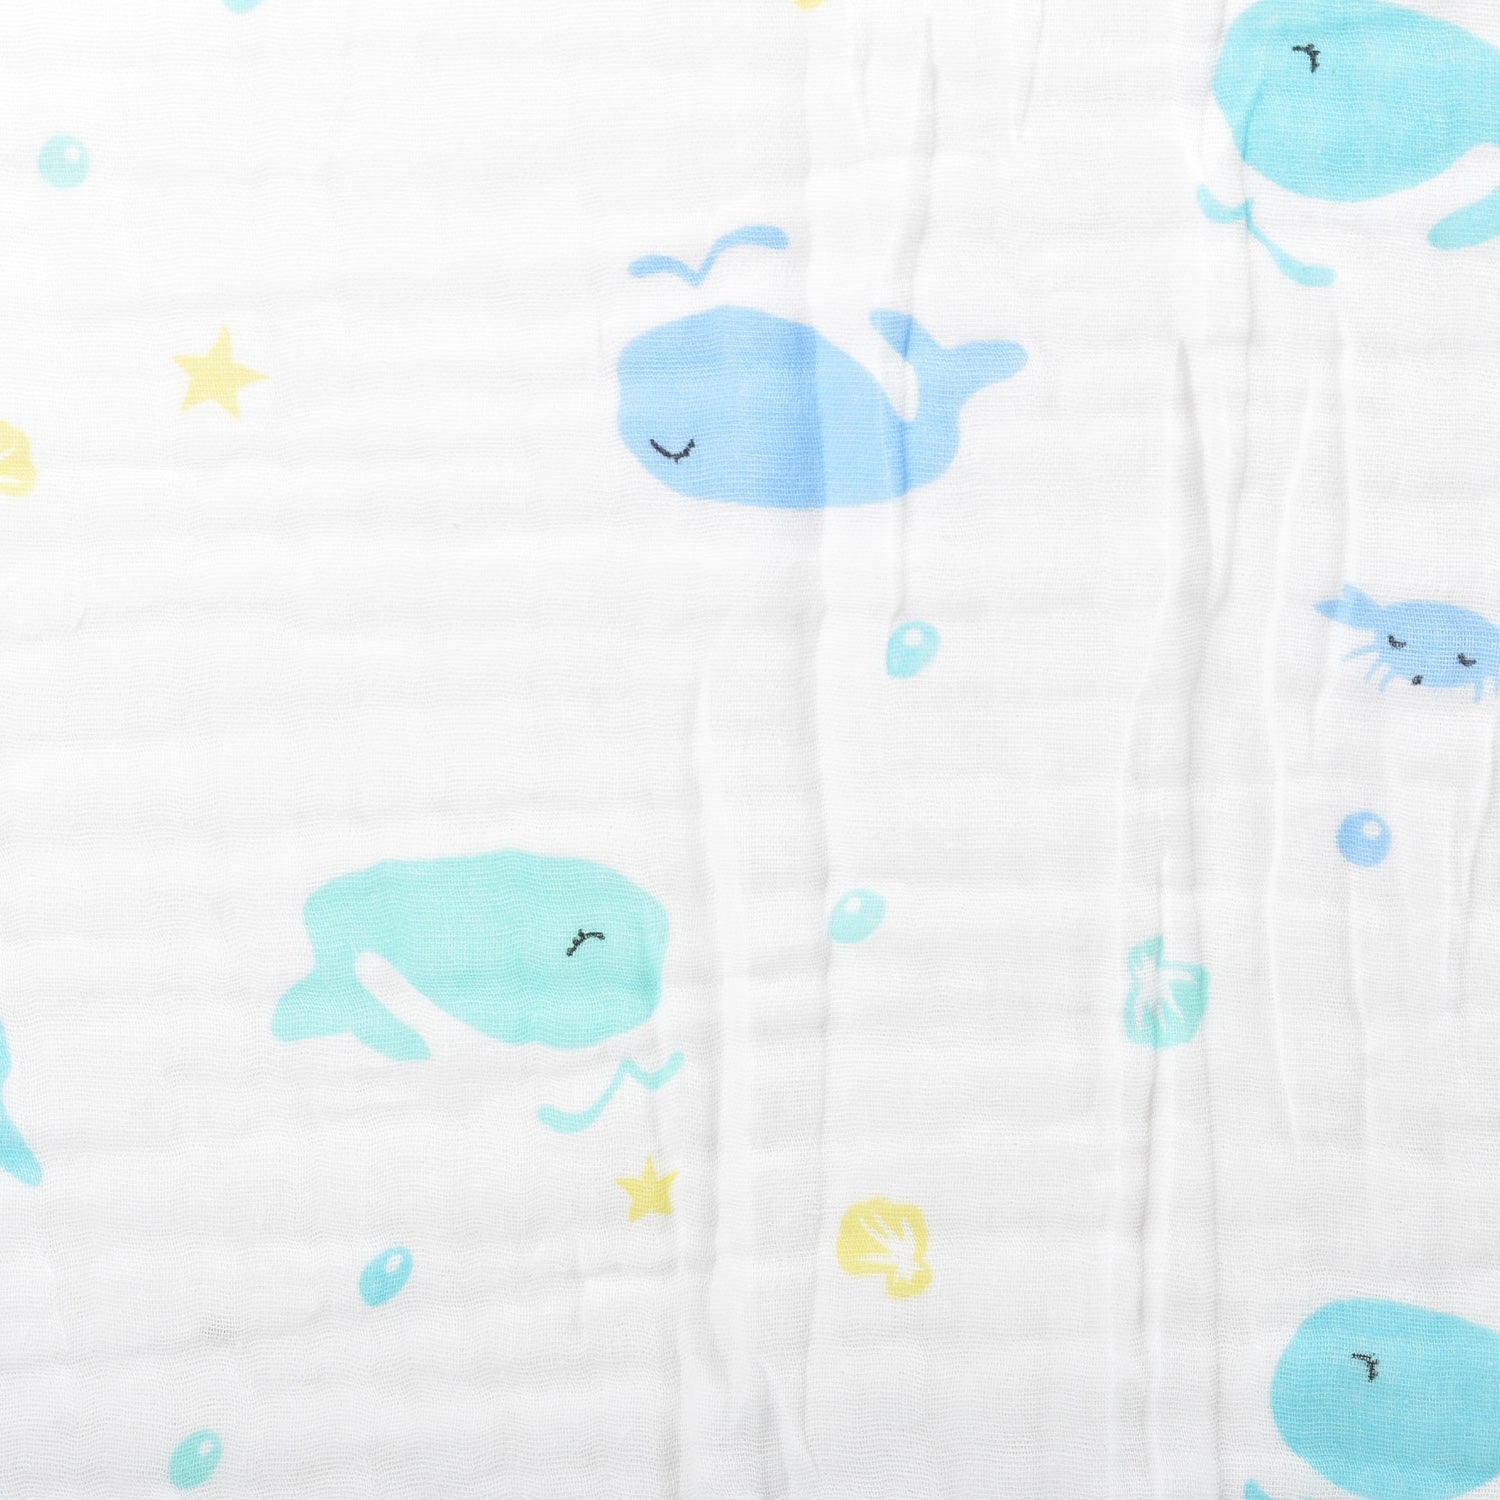 Baby Super Soft Absorbent Muslin  6 Layer Bath Towel - 60X120 cm- Printed Mix Design